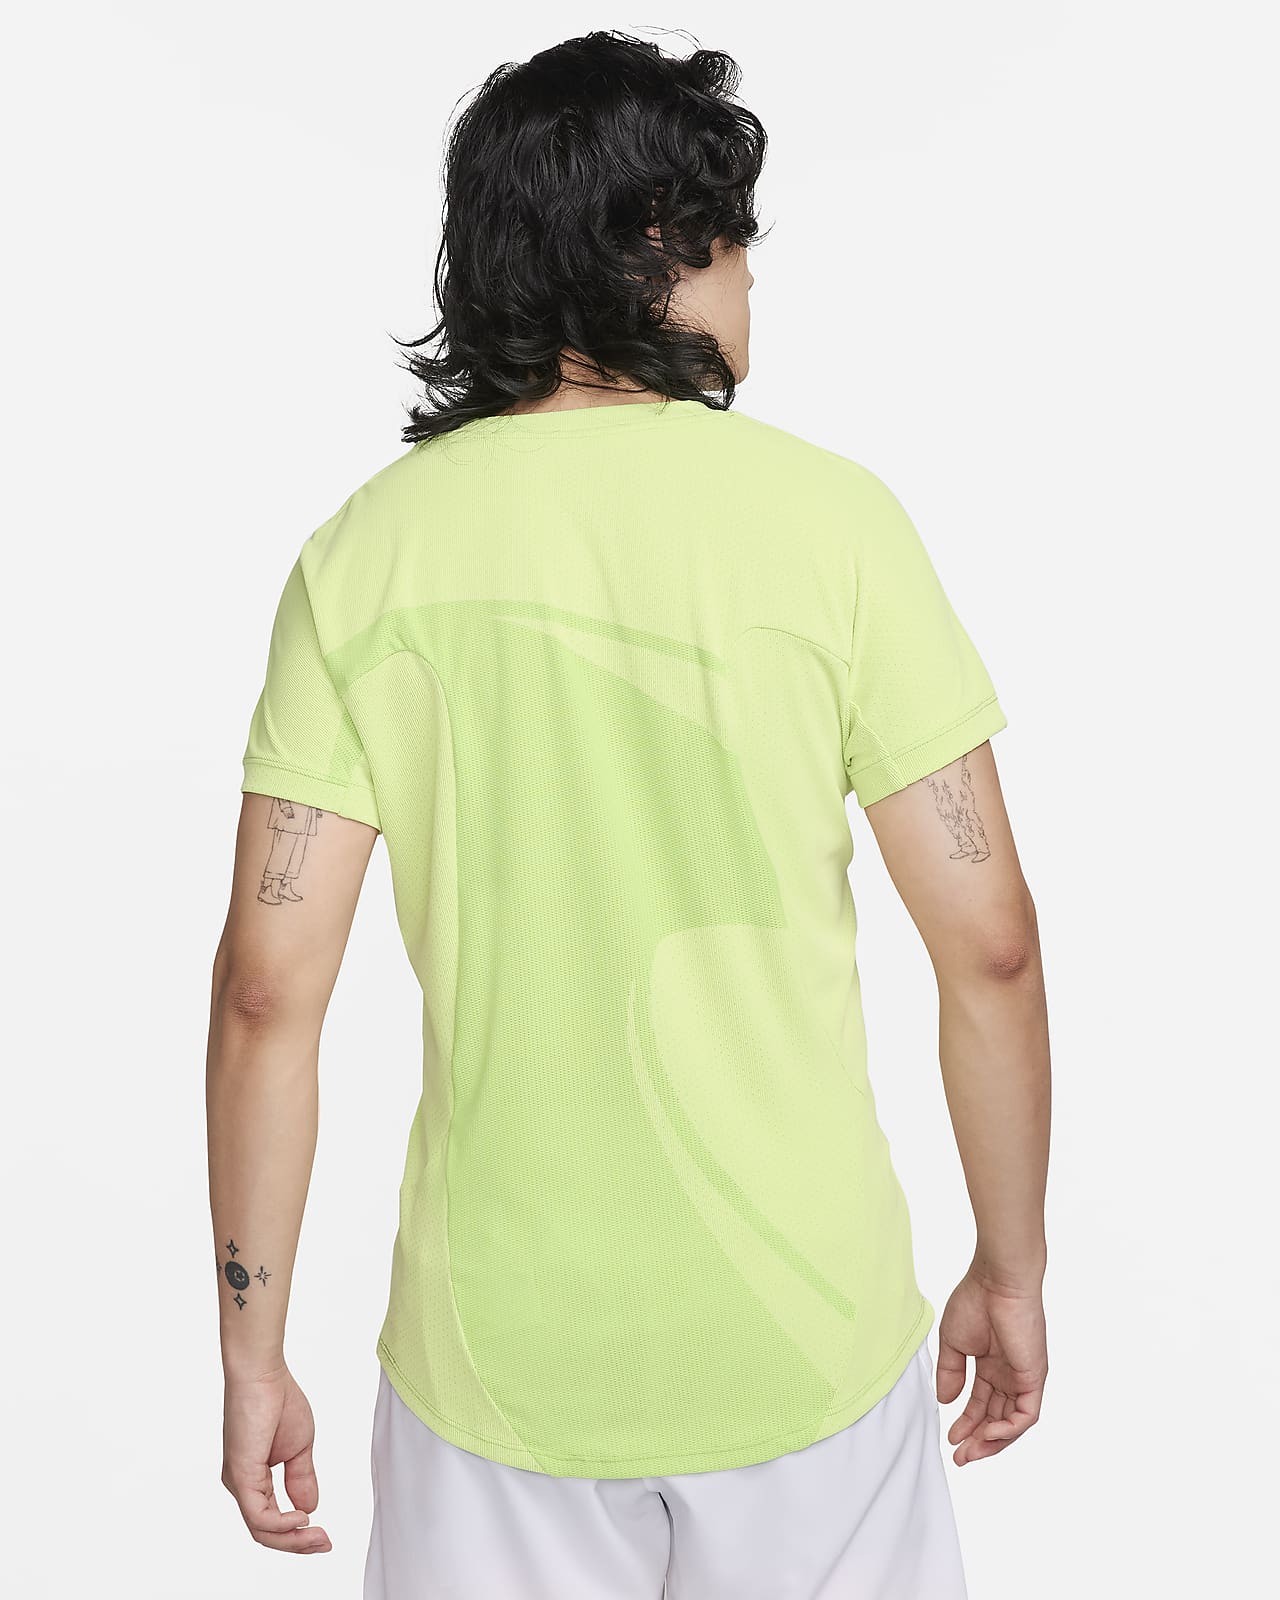 Nike Dri-FIT Athlete T-Shirt Running - Green